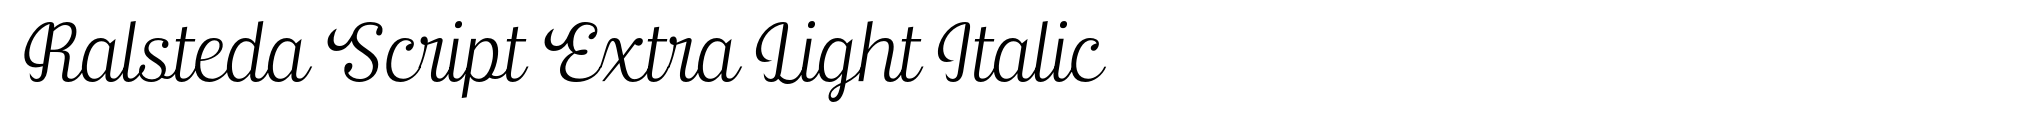 Ralsteda Script Extra Light Italic image